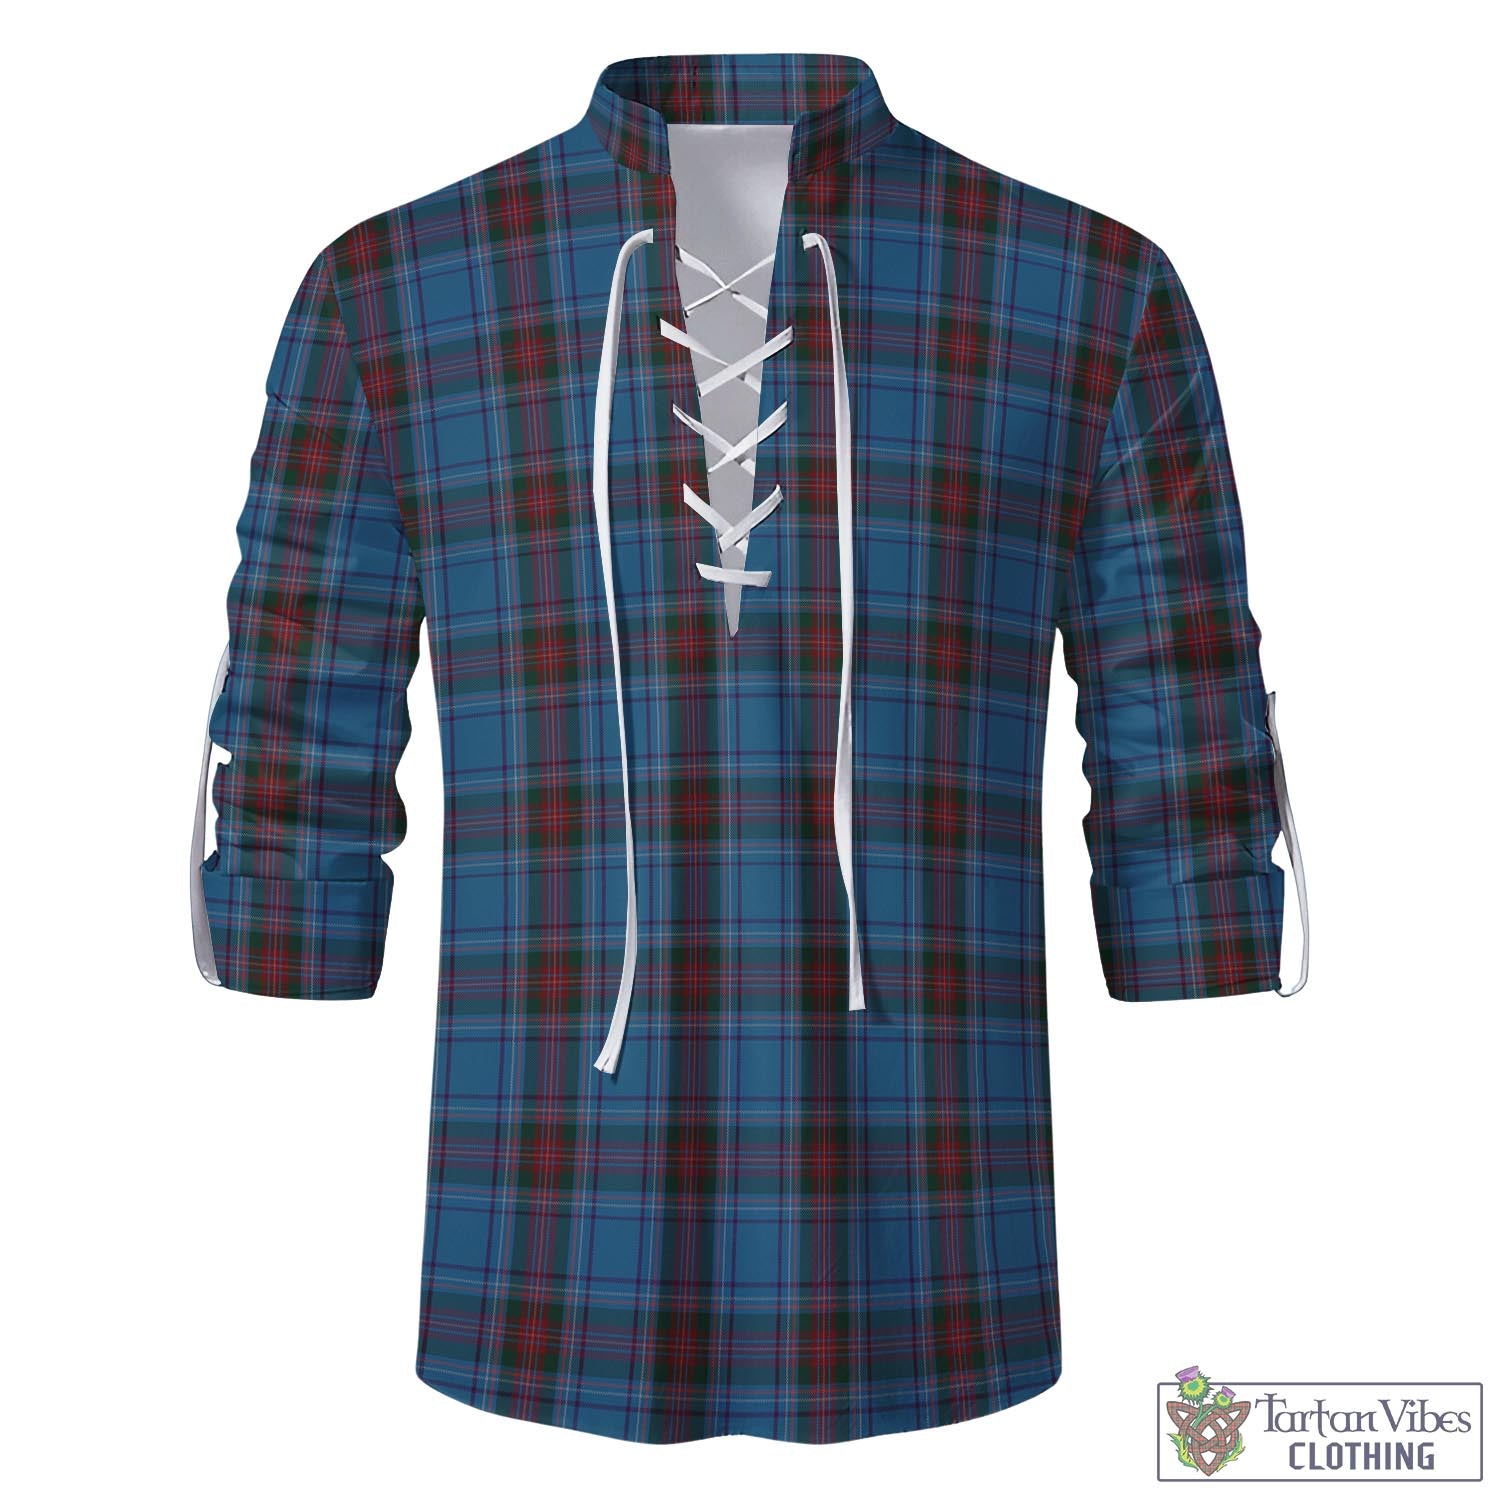 Tartan Vibes Clothing Louth County Ireland Tartan Men's Scottish Traditional Jacobite Ghillie Kilt Shirt